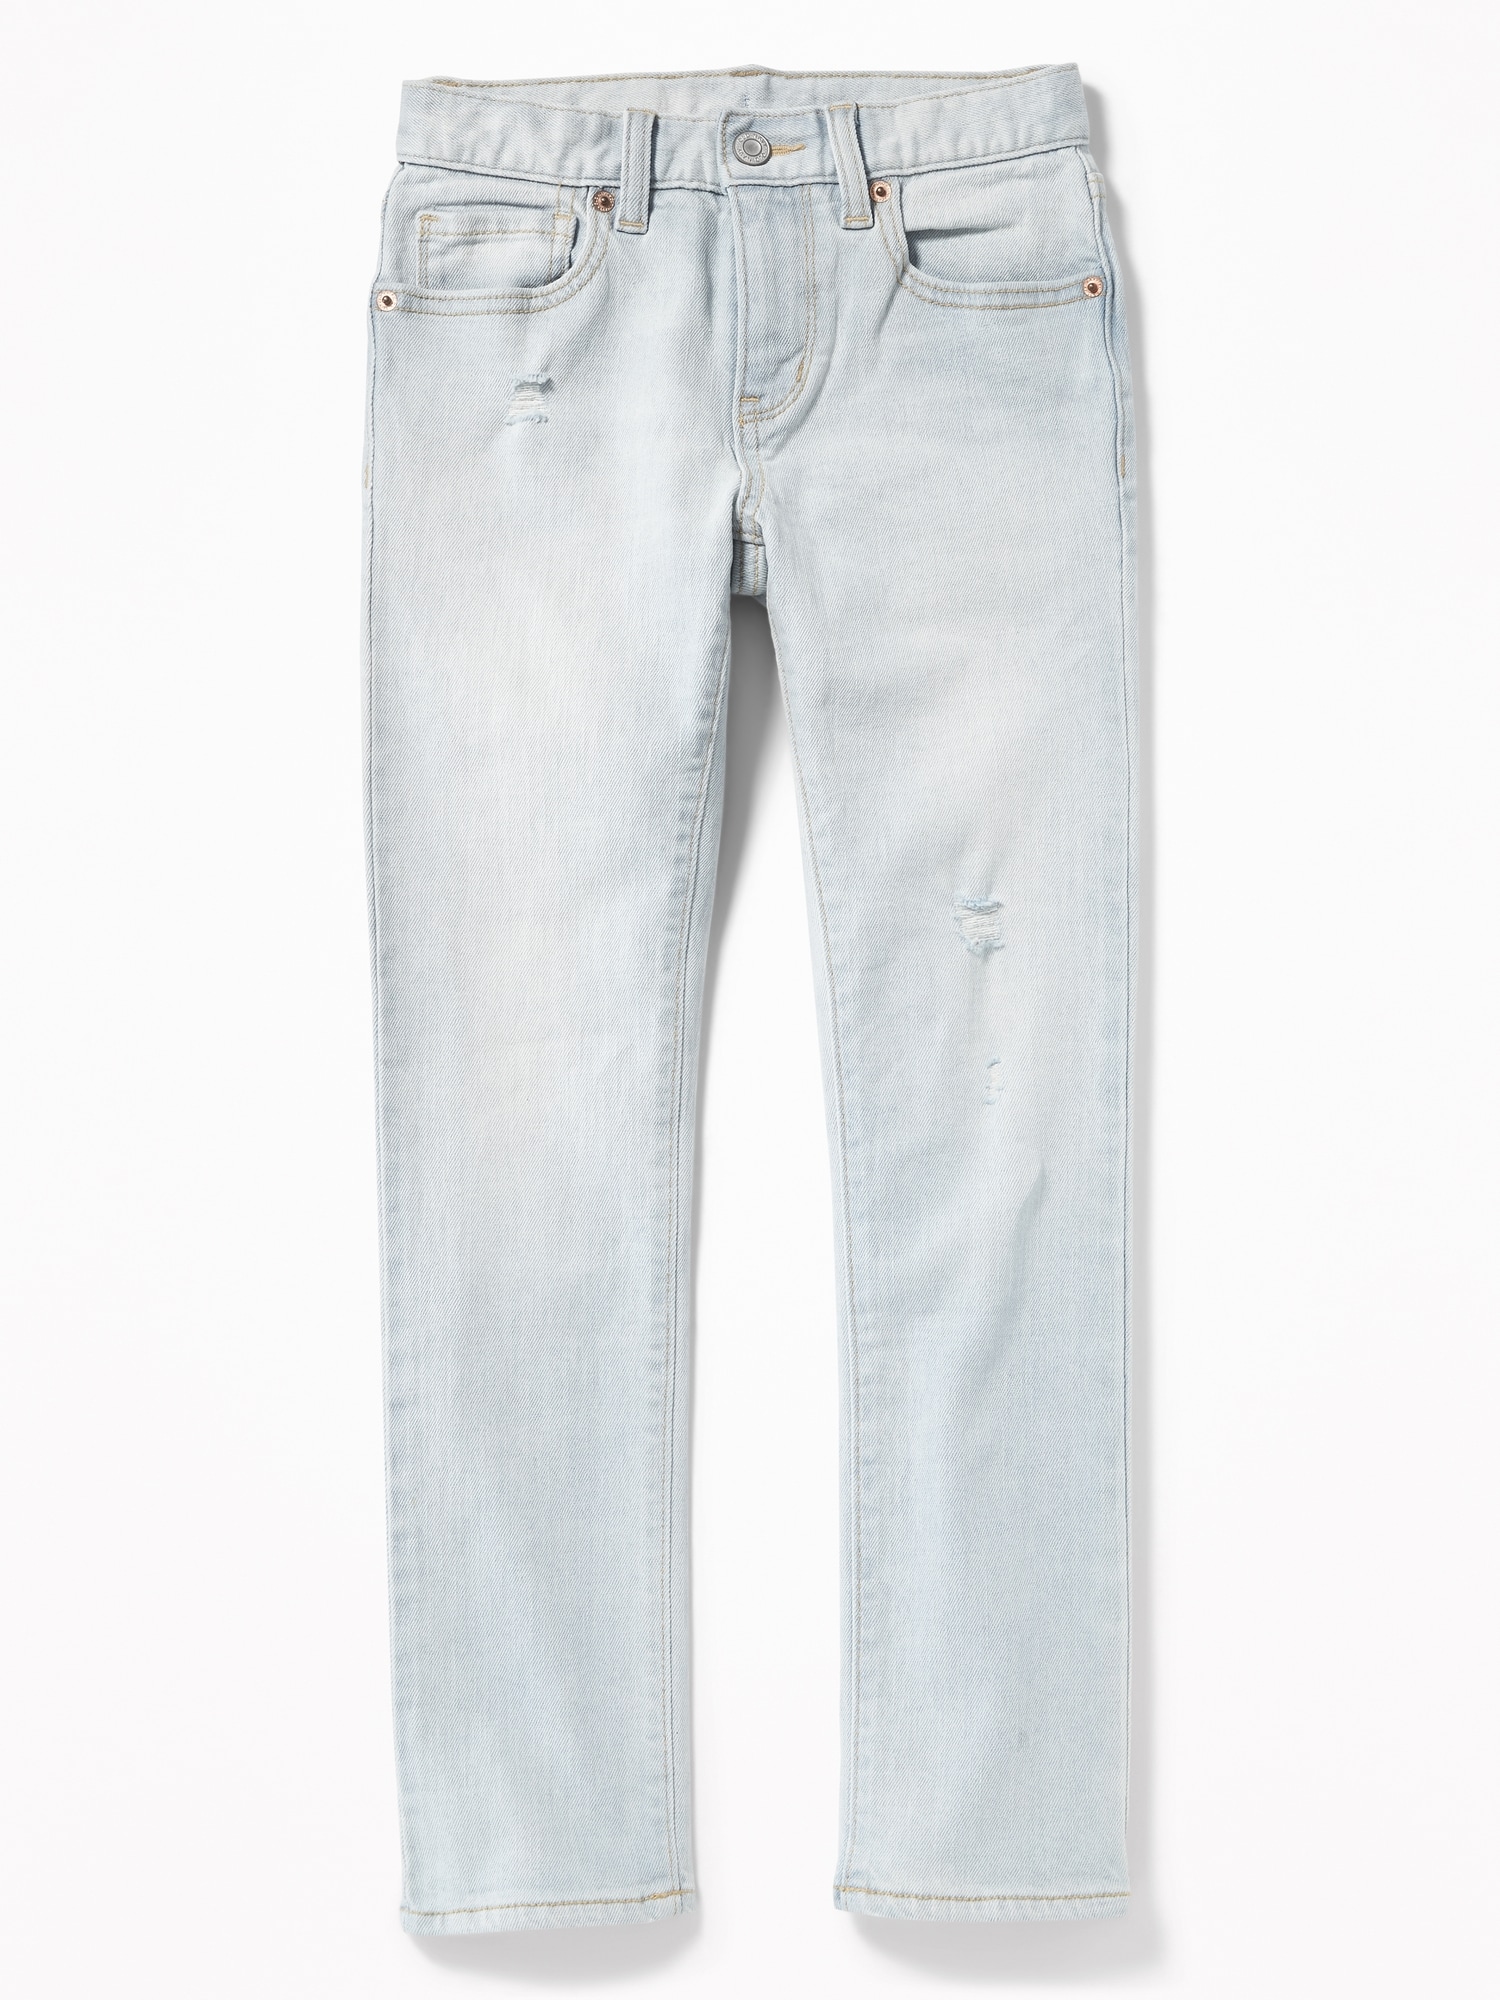 Distressed Built-In Flex Super Skinny Jeans For Boys | Old Navy